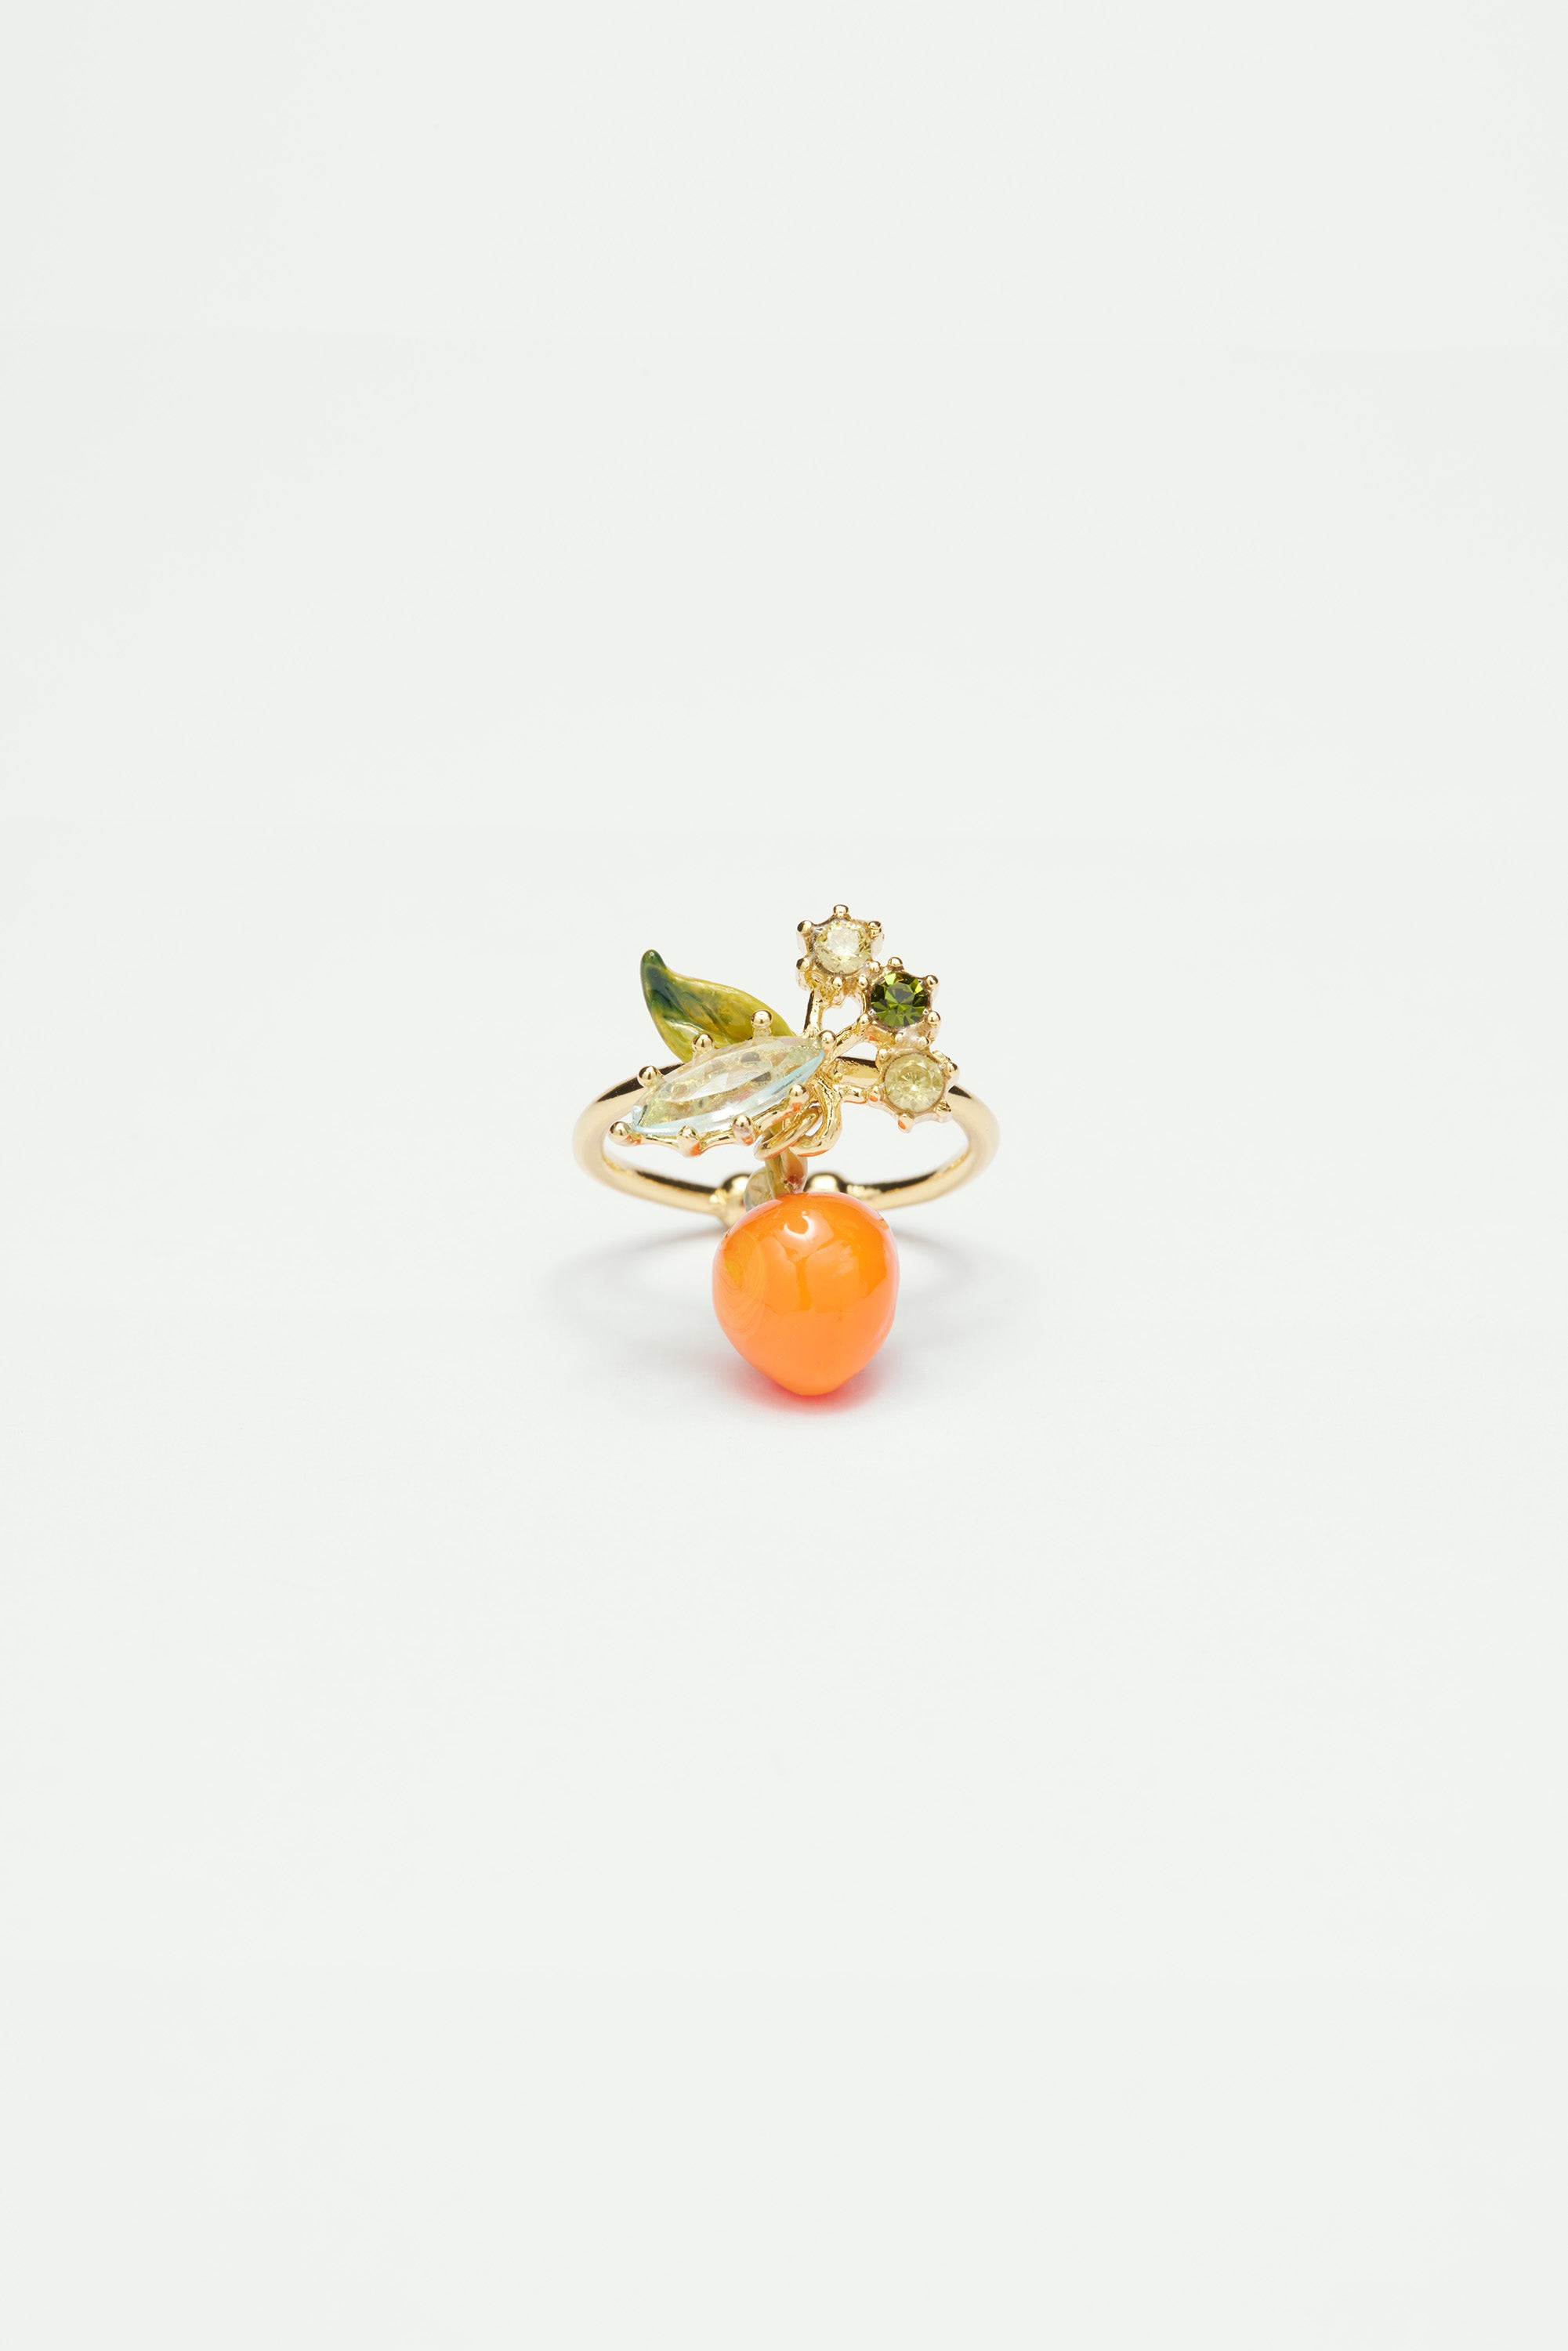 Bague ajustable orange et petites pierres